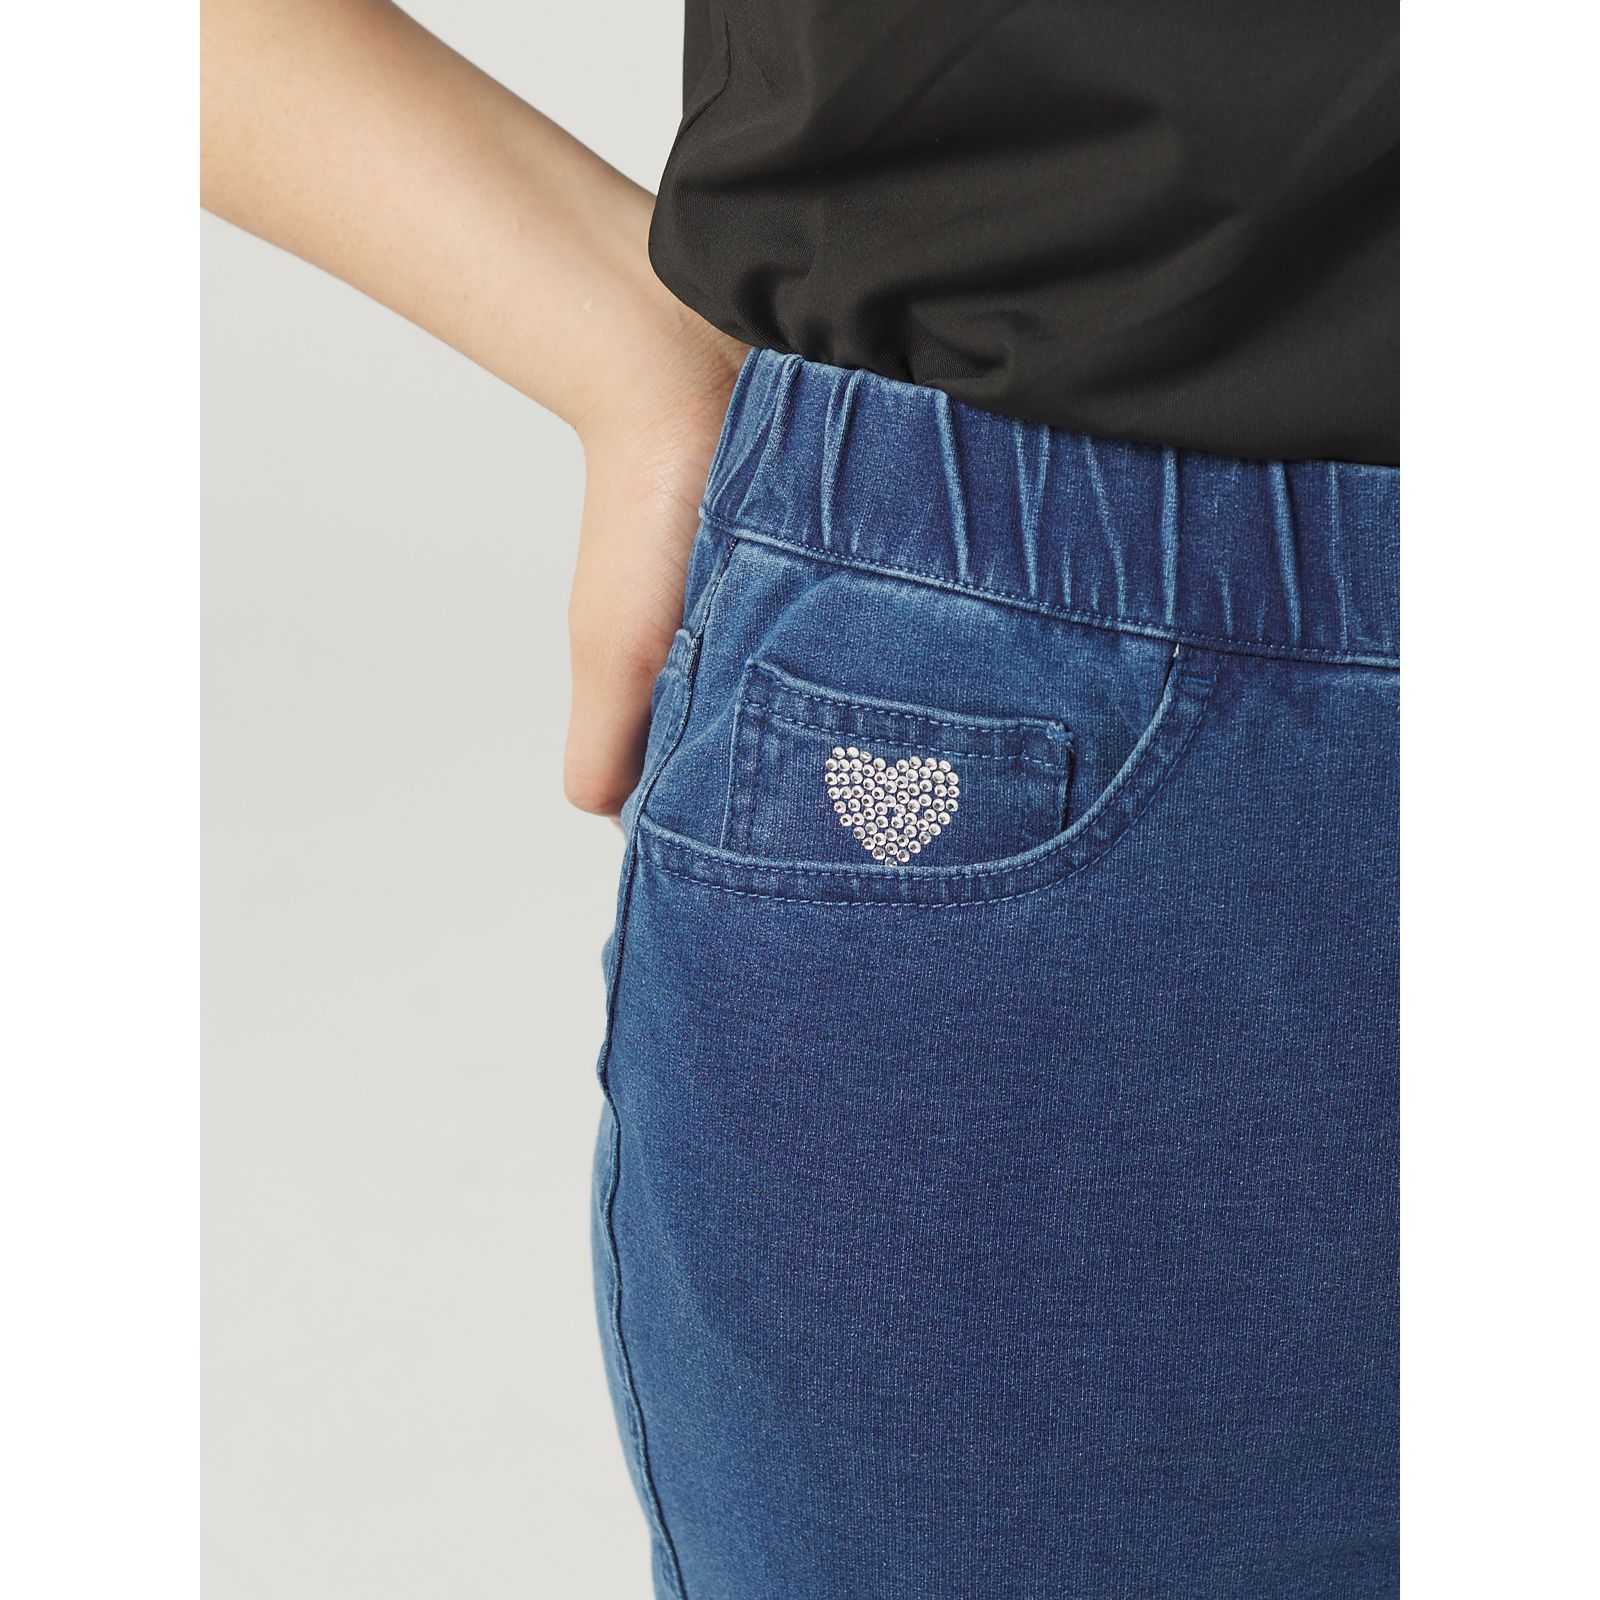 SweatyRocks Women's High Waist Rolled Hem Jean Shorts Straight Leg Hot  Pants Denim Shorts with Pocket